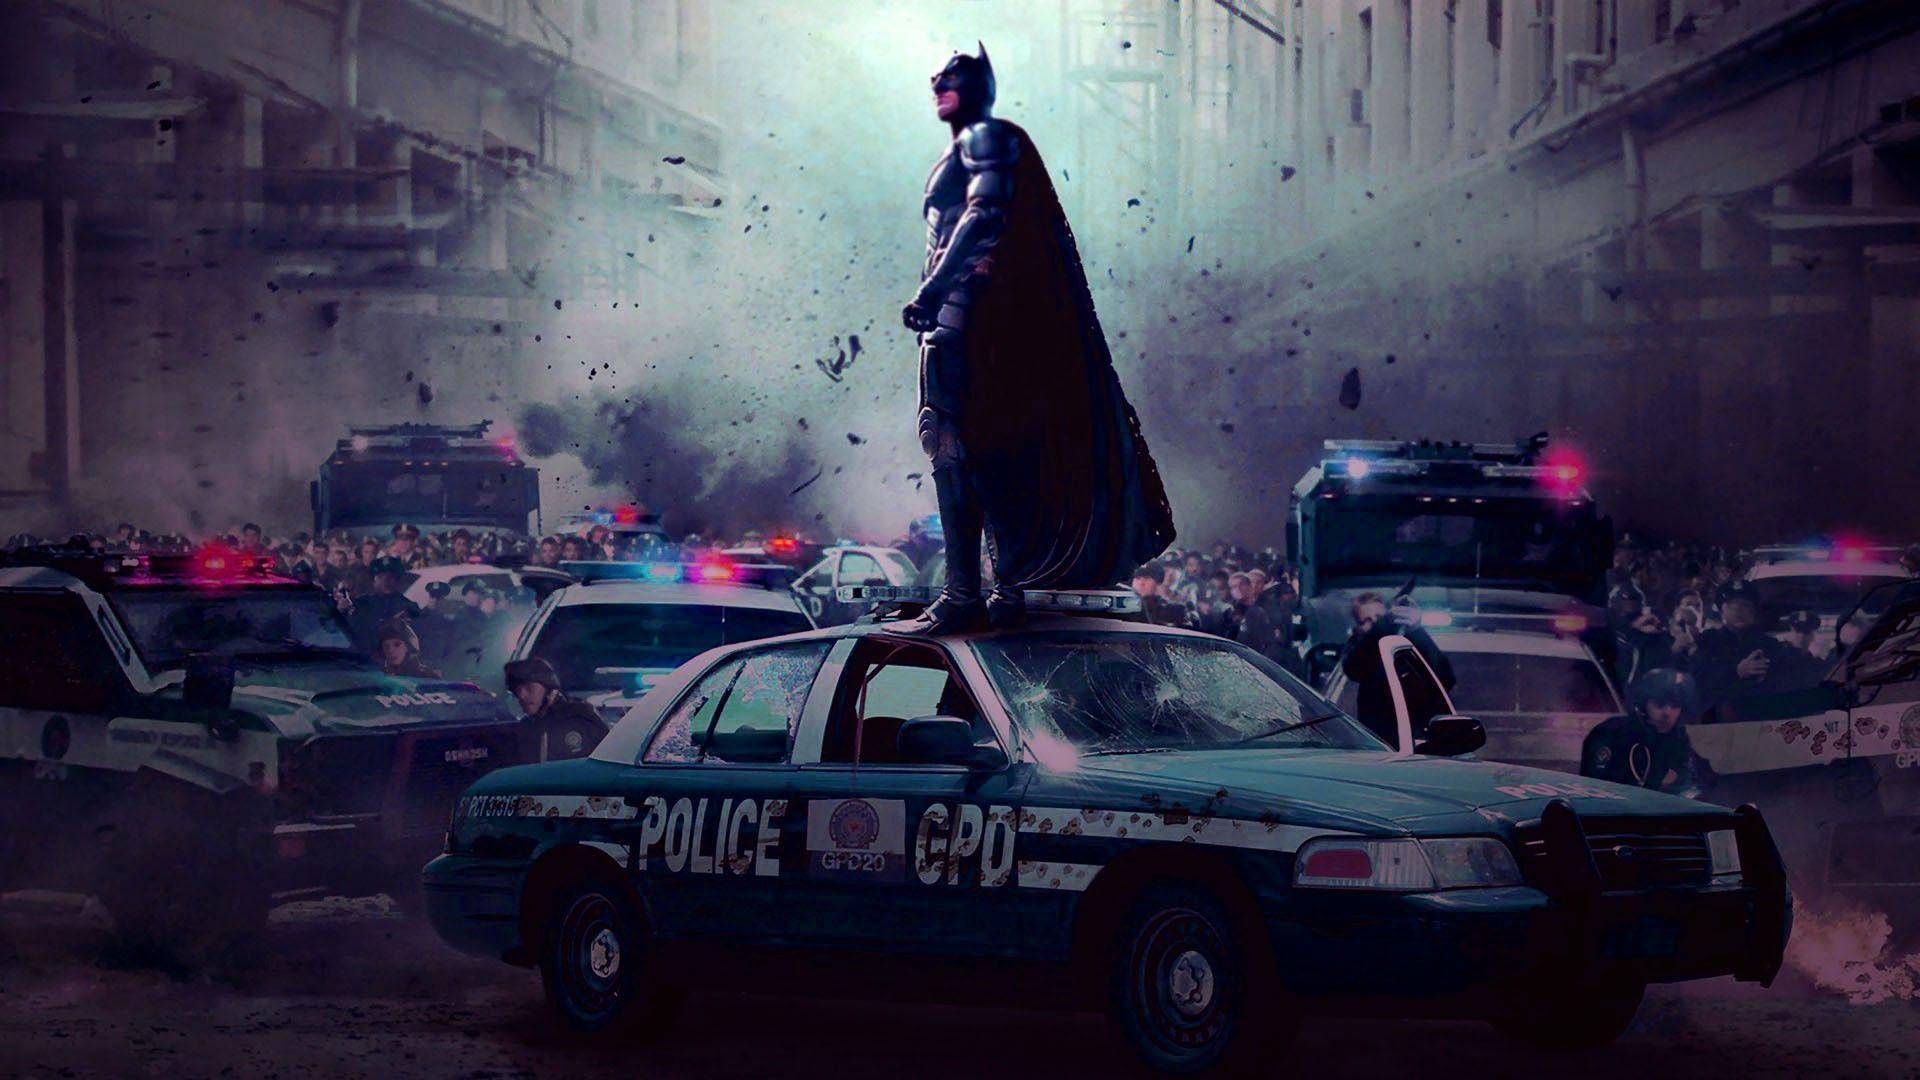 Batman Police Car in Movies